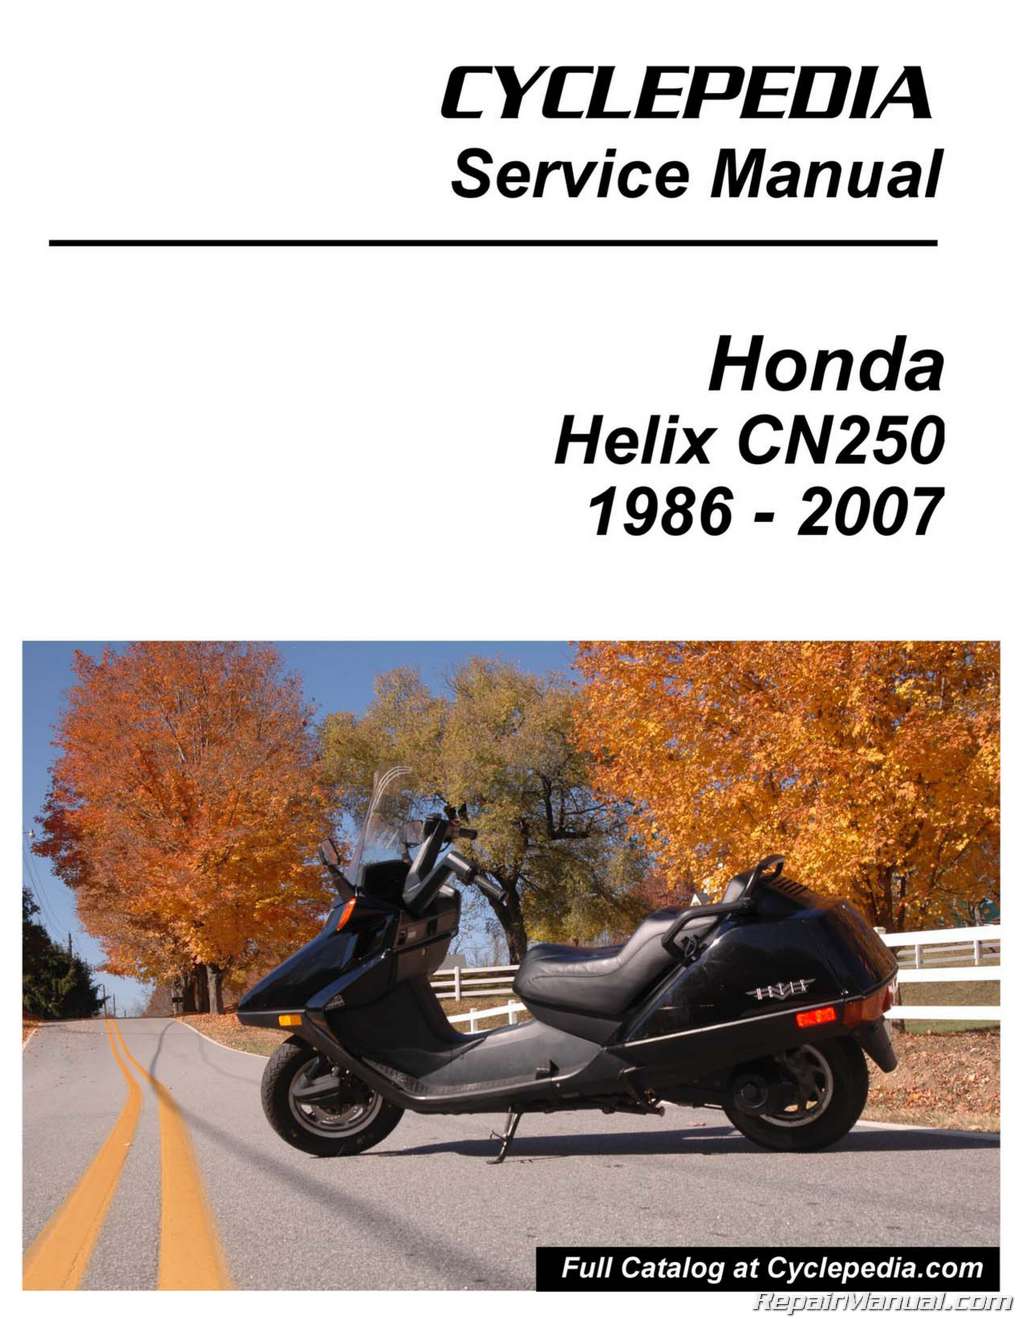 Cyclepedia Honda Helix Manual